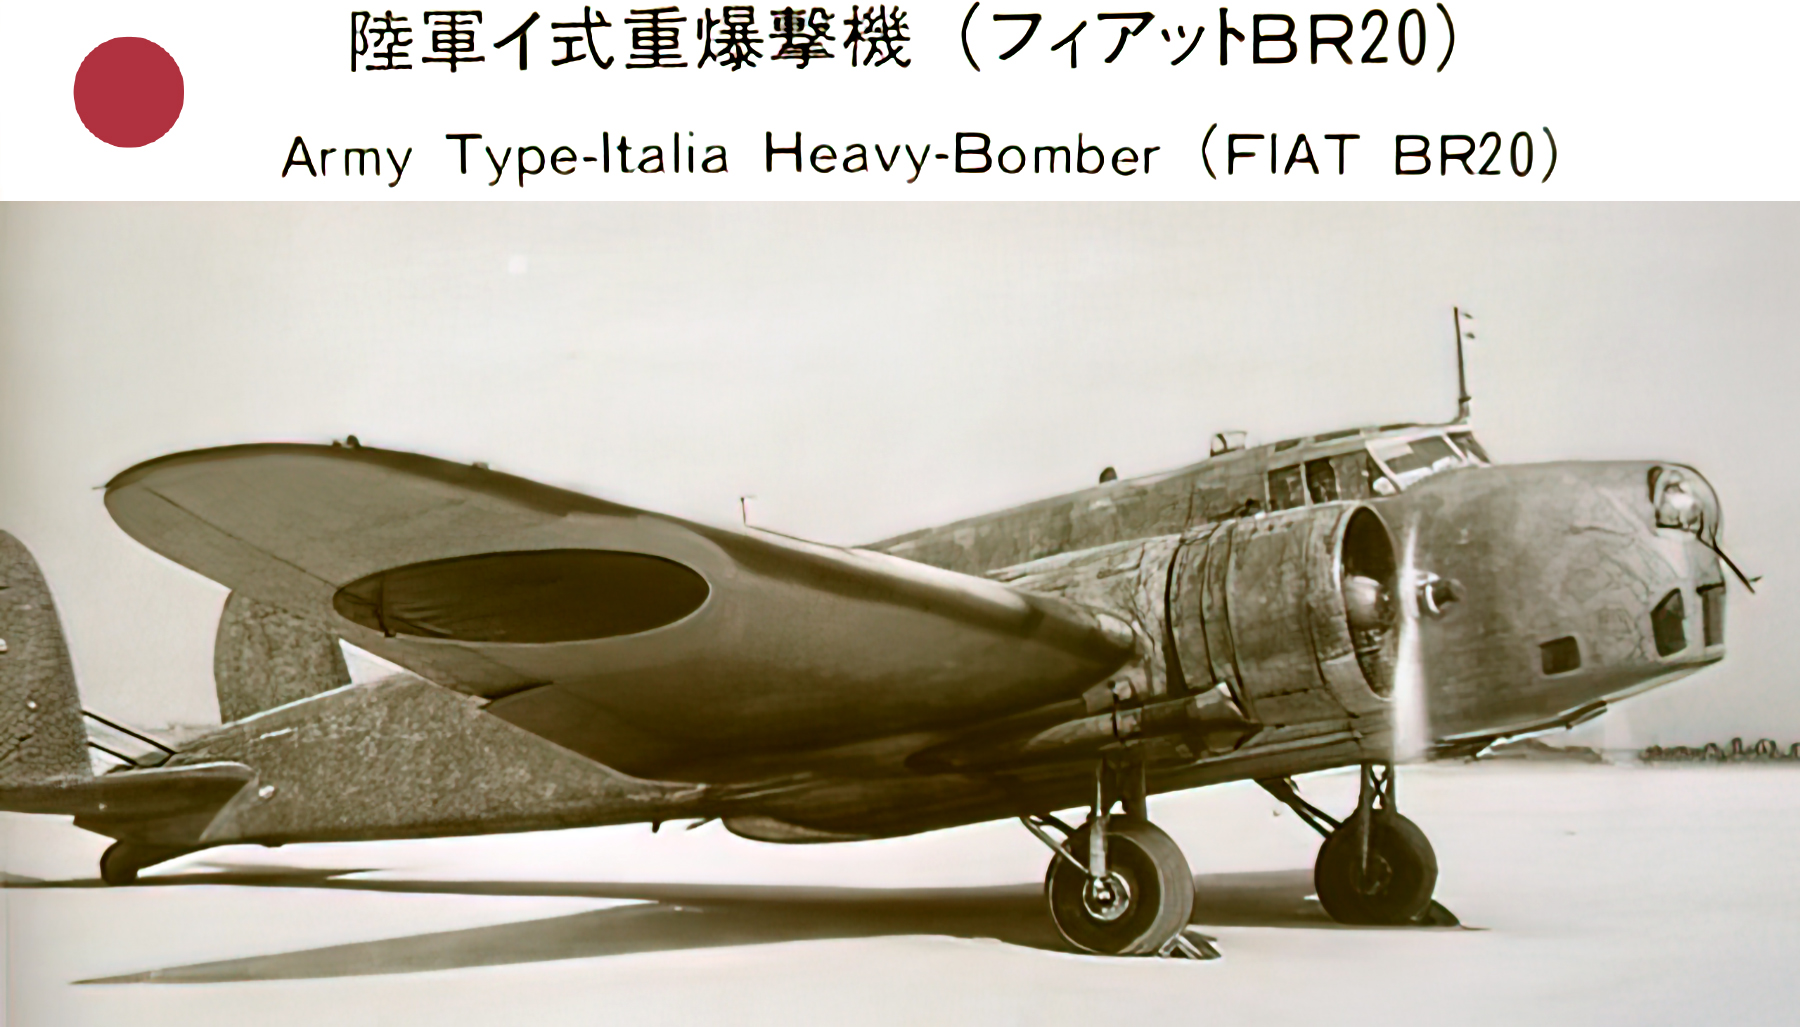 Fiat Br20 Ruth Imperial Japanese Army Air Force 12th Sentai 7 Hikodan at Chushuitzu AF Taiwan 1938 03